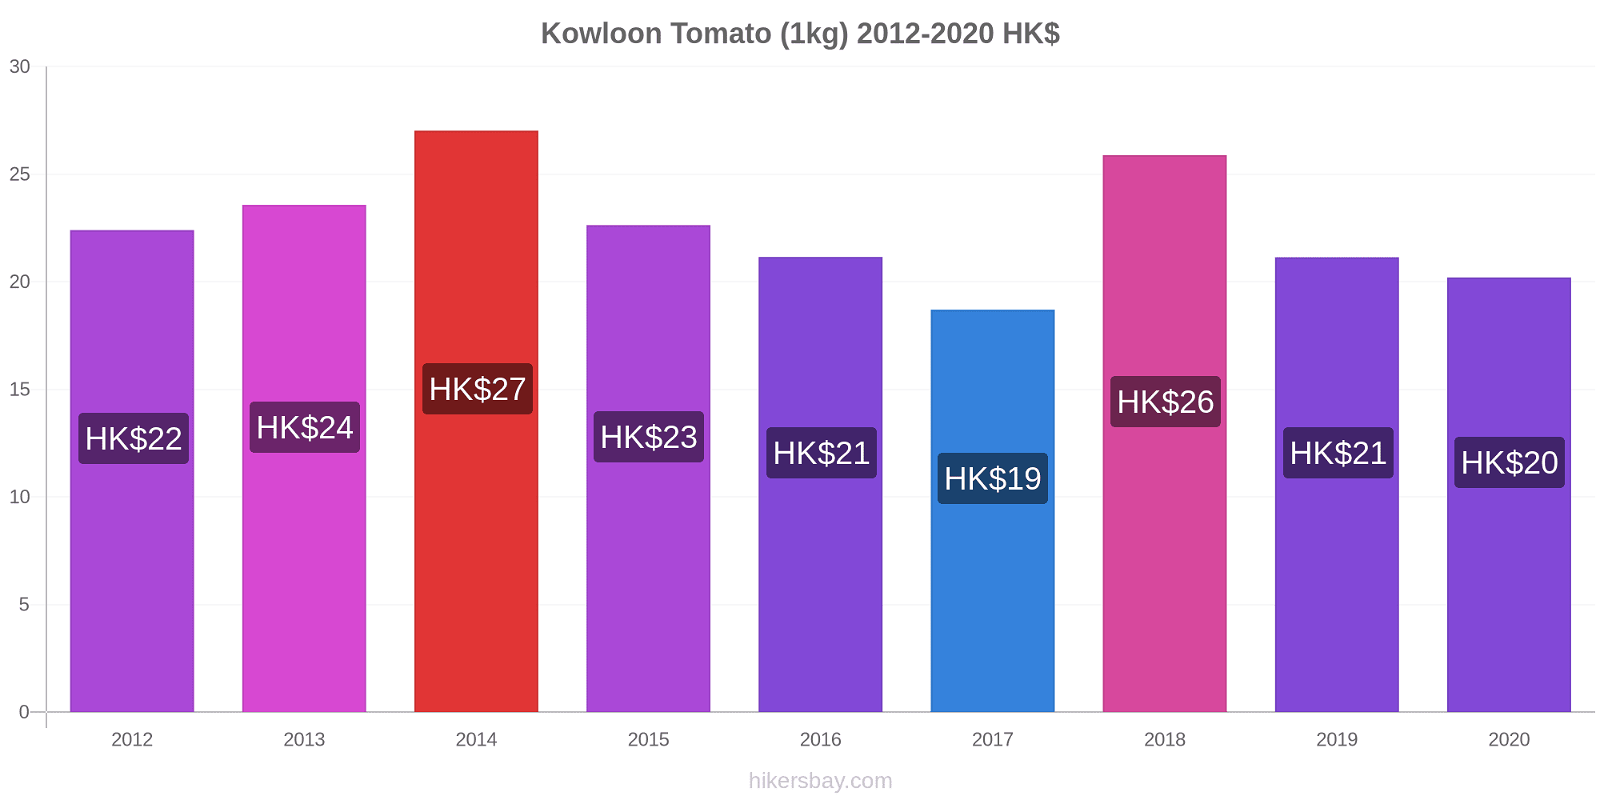 Kowloon price changes Tomato (1kg) hikersbay.com